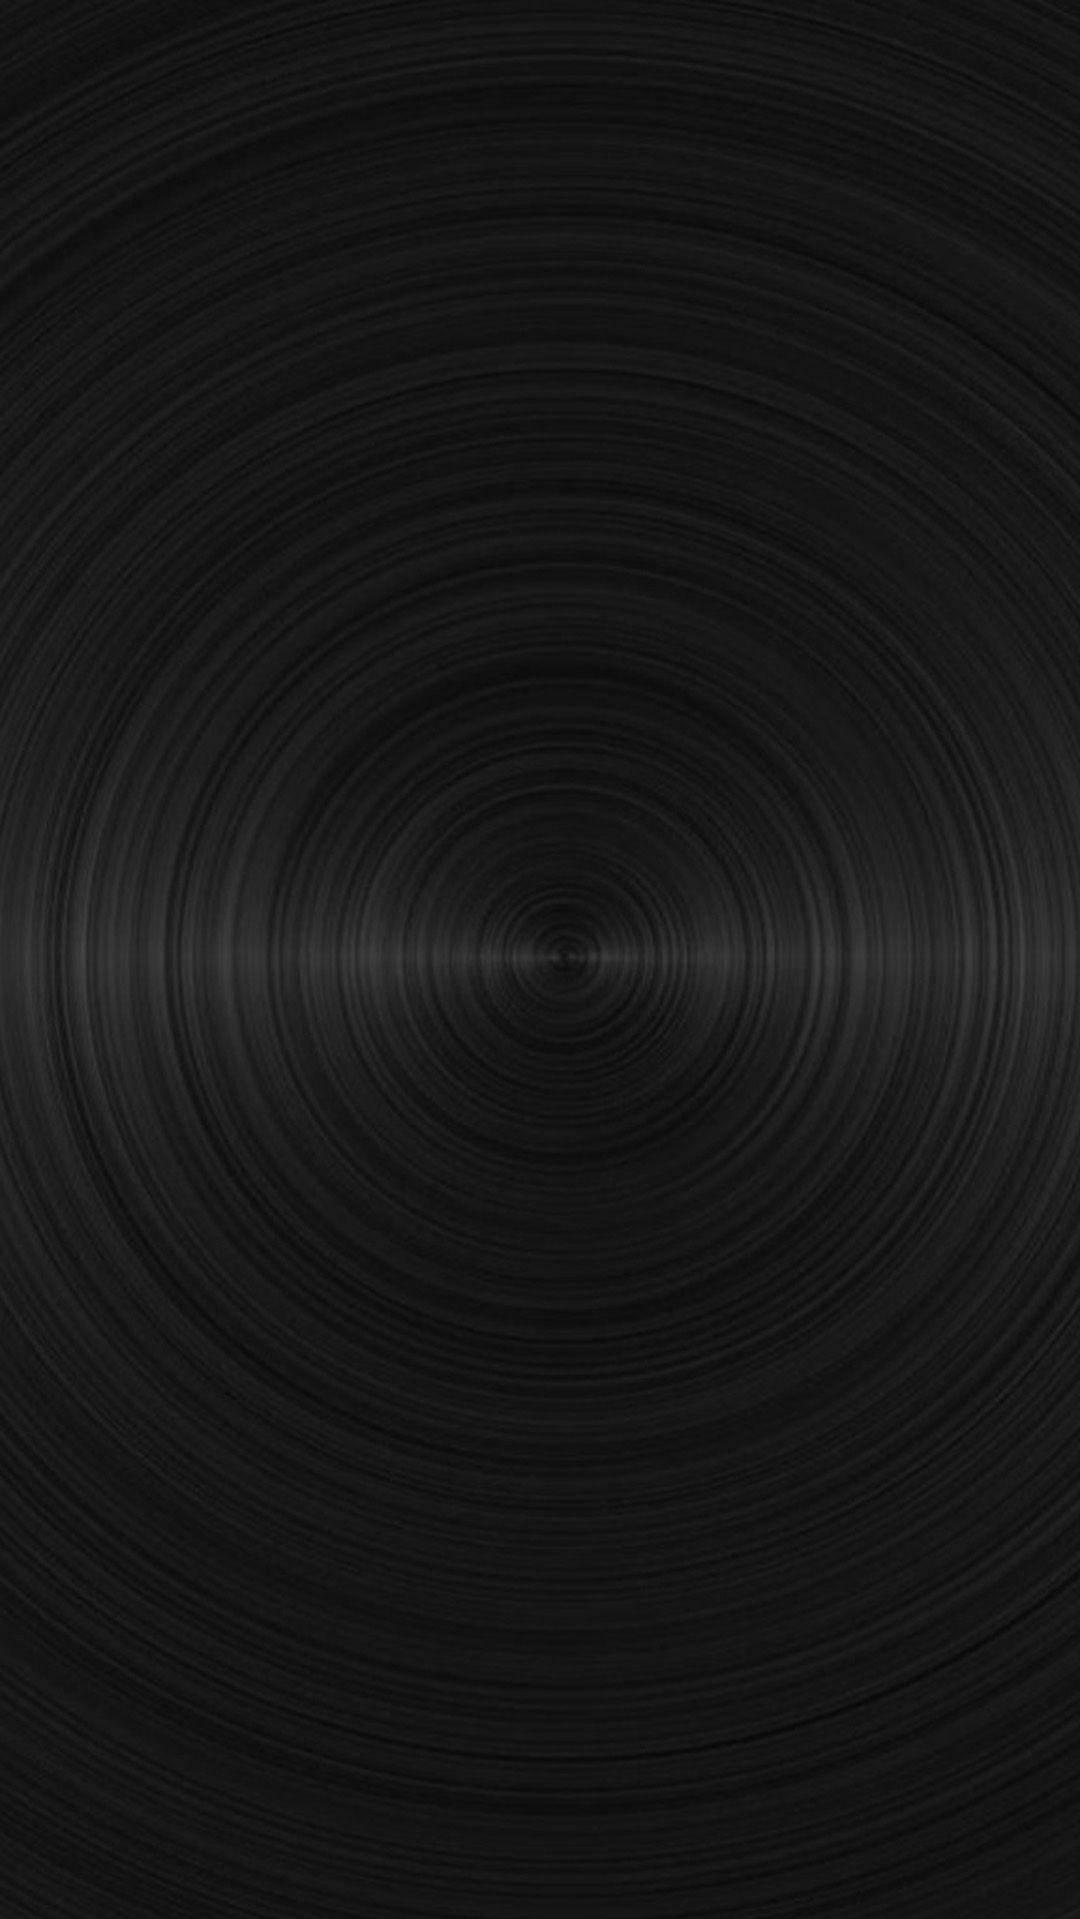 200+] Plain Black Background s | Wallpapers.com